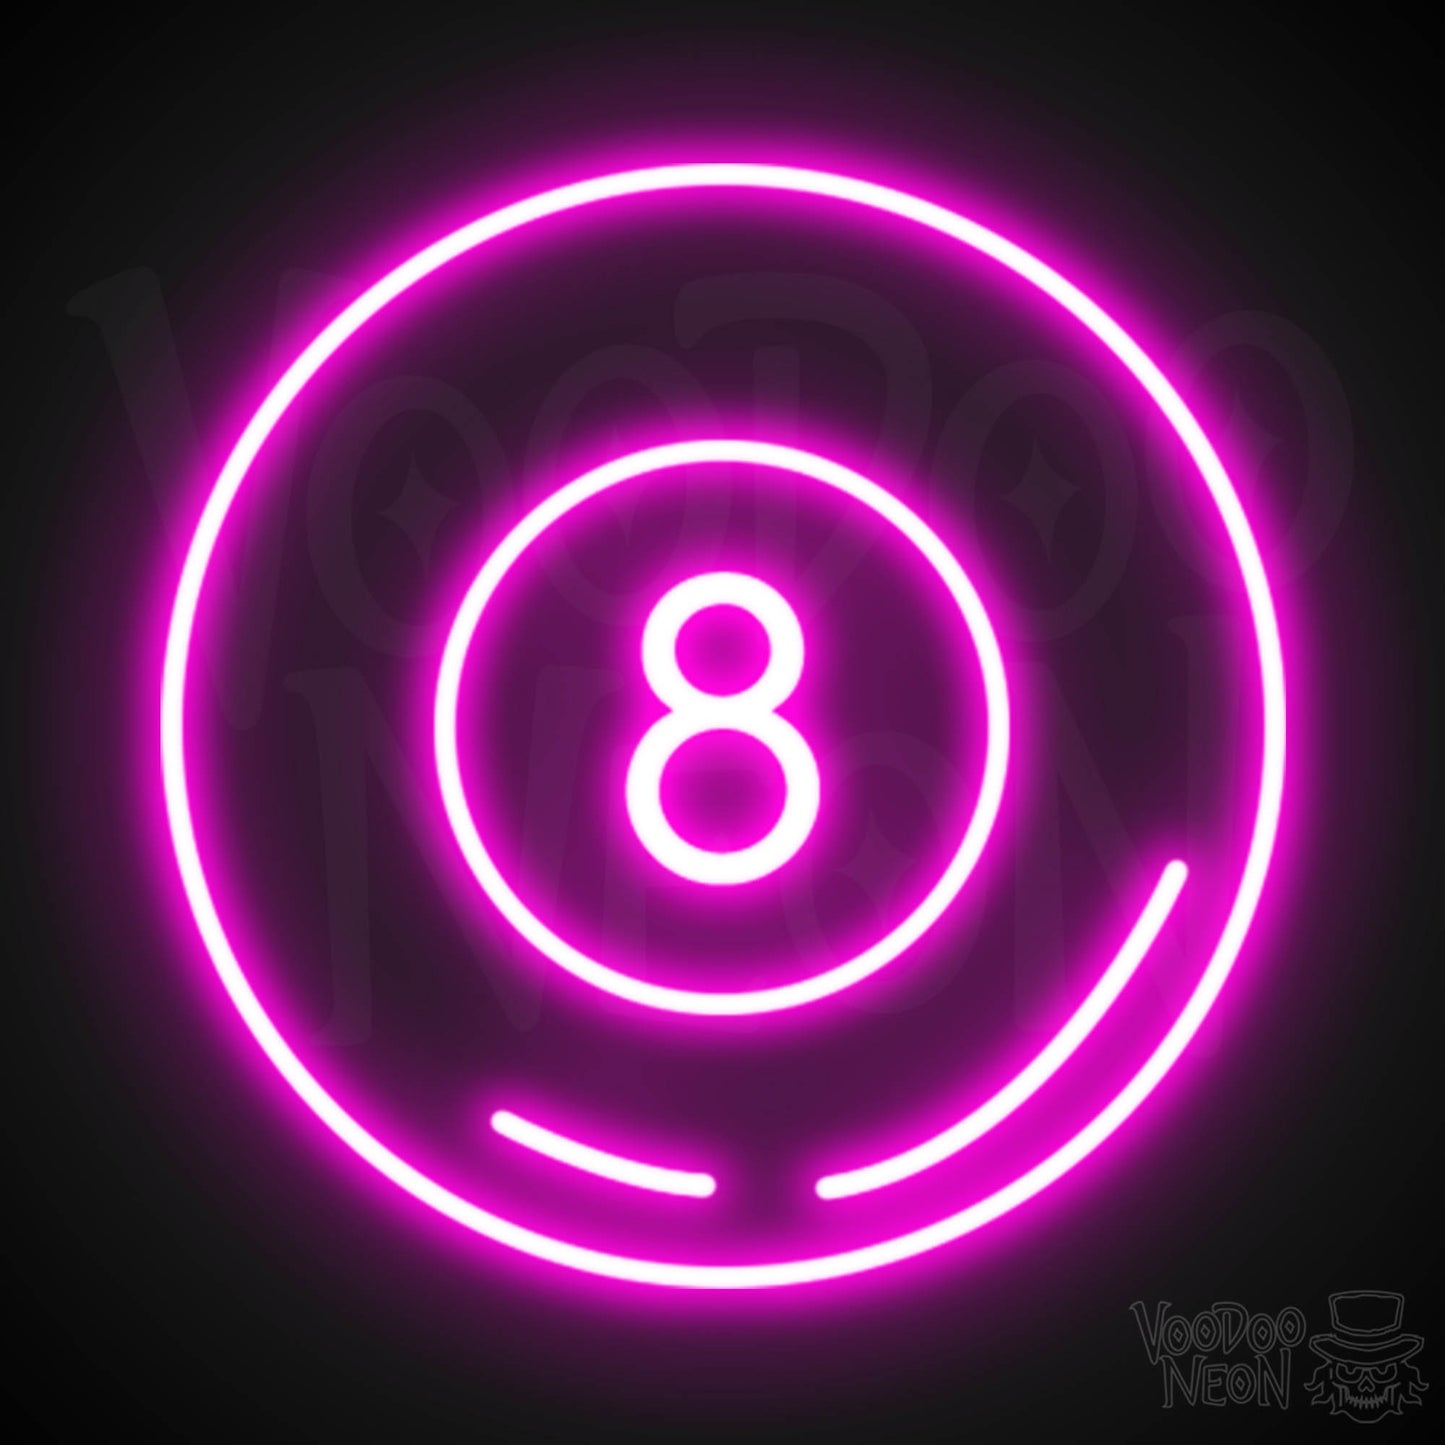 Magic 8 Ball Neon Sign - Neon Magic 8 Ball Sign - Wall Art - Color Pink